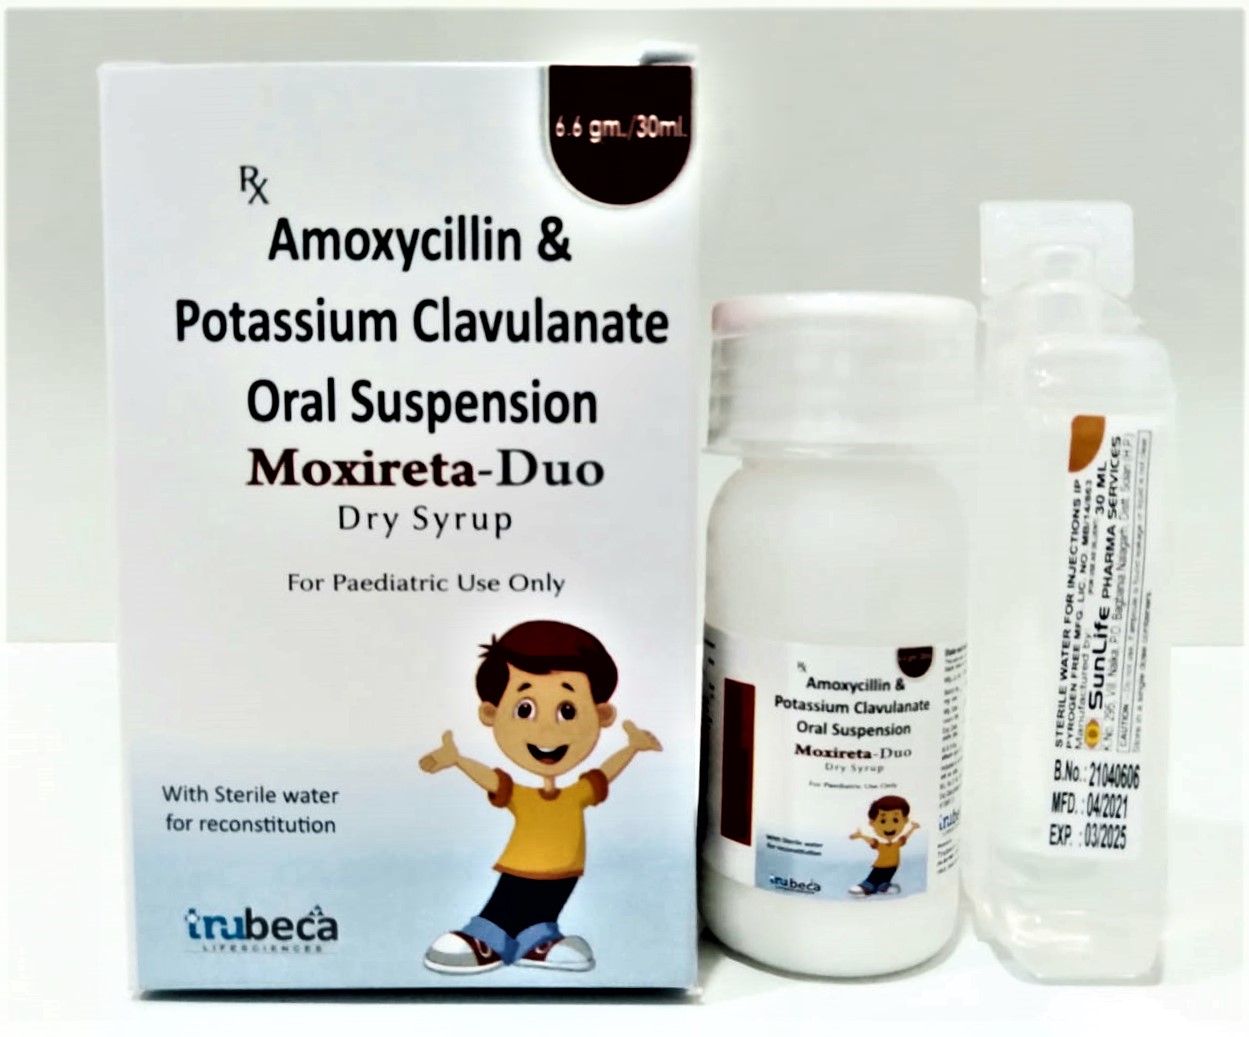 amoxycillin 400mg + potassium clavulanate 57mg dry syrup with water & monocarton